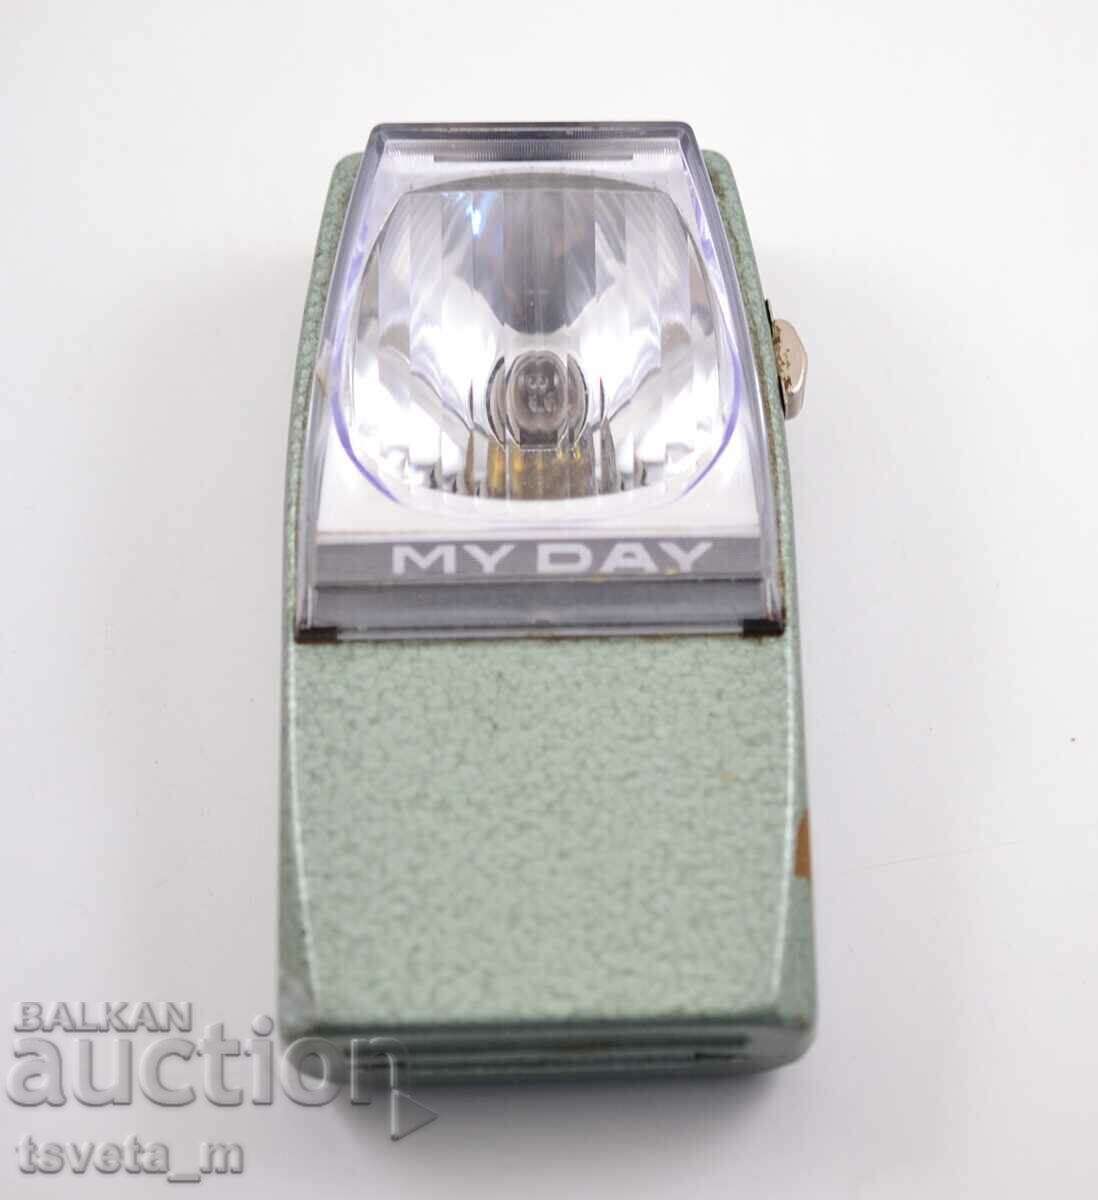 Signal lantern with white light "MY DAY"